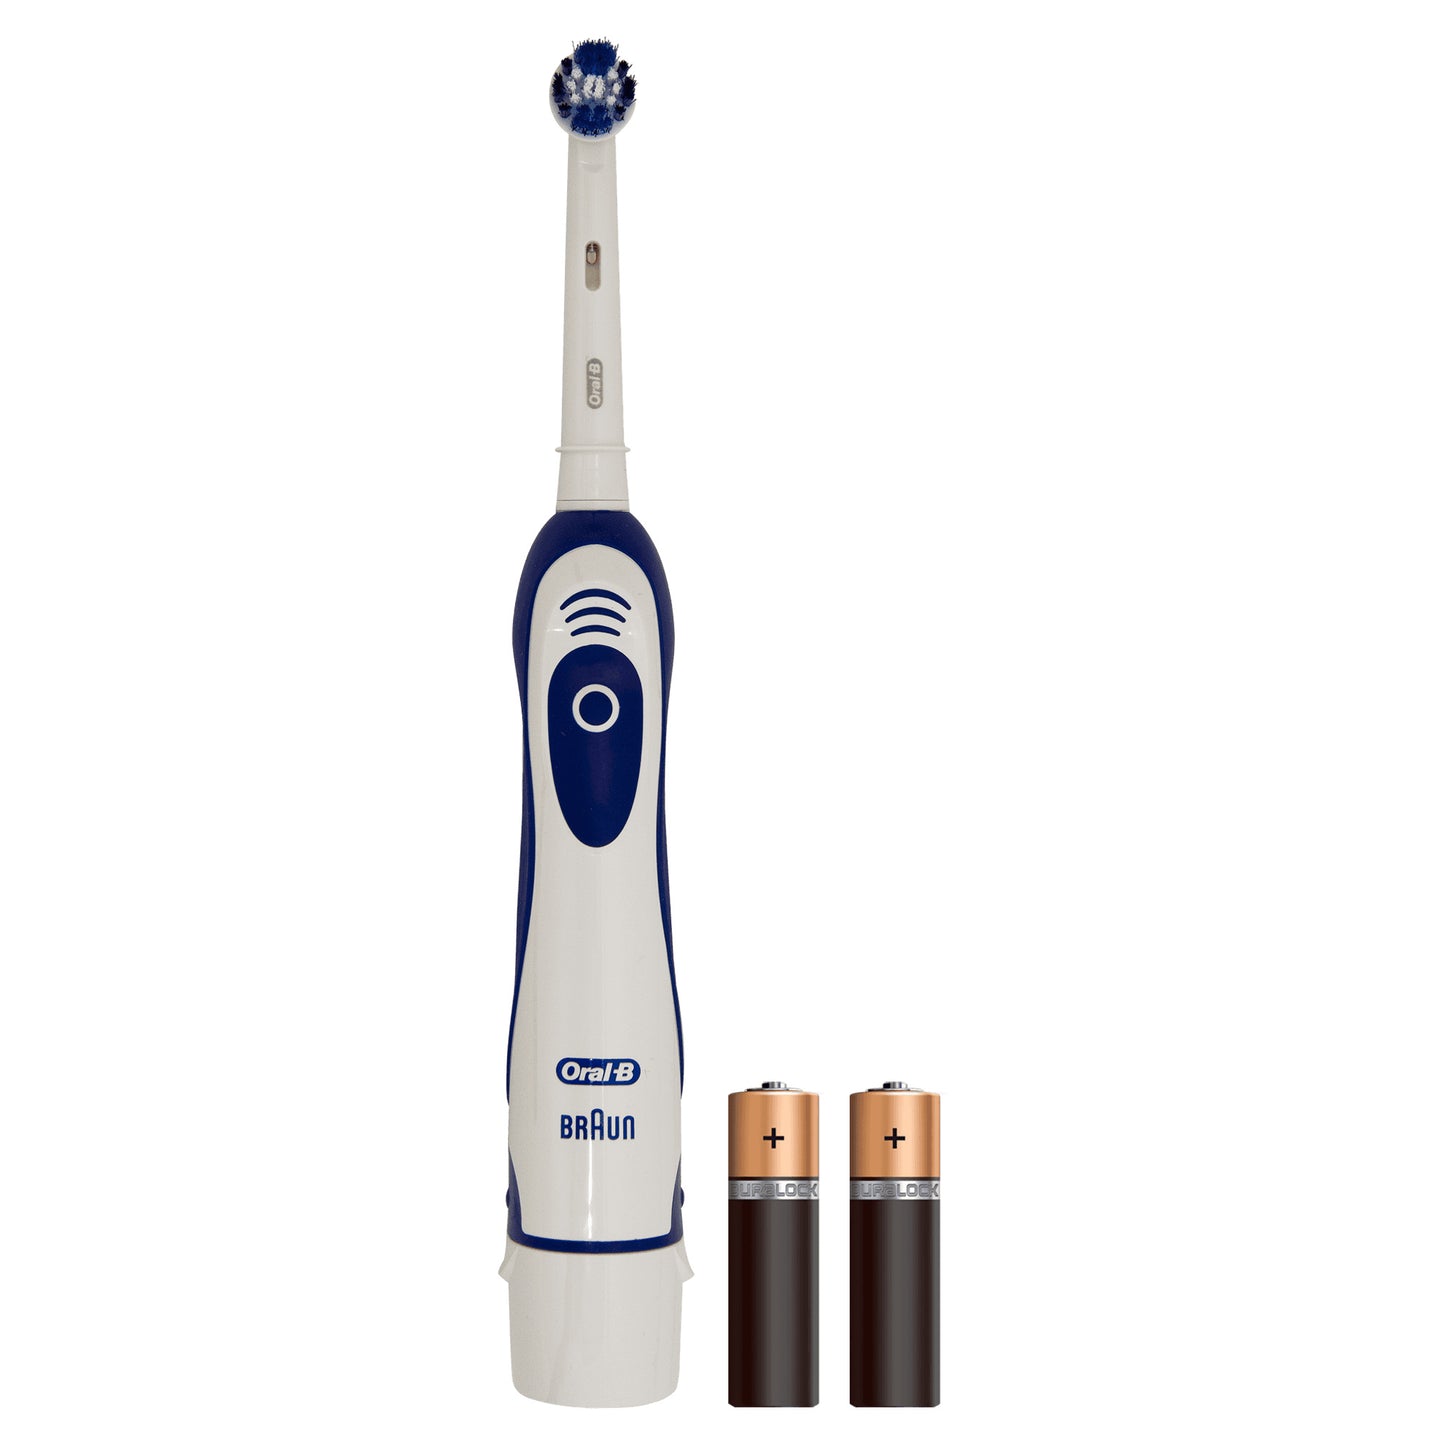 Oral-B Advance Power Toothbrush